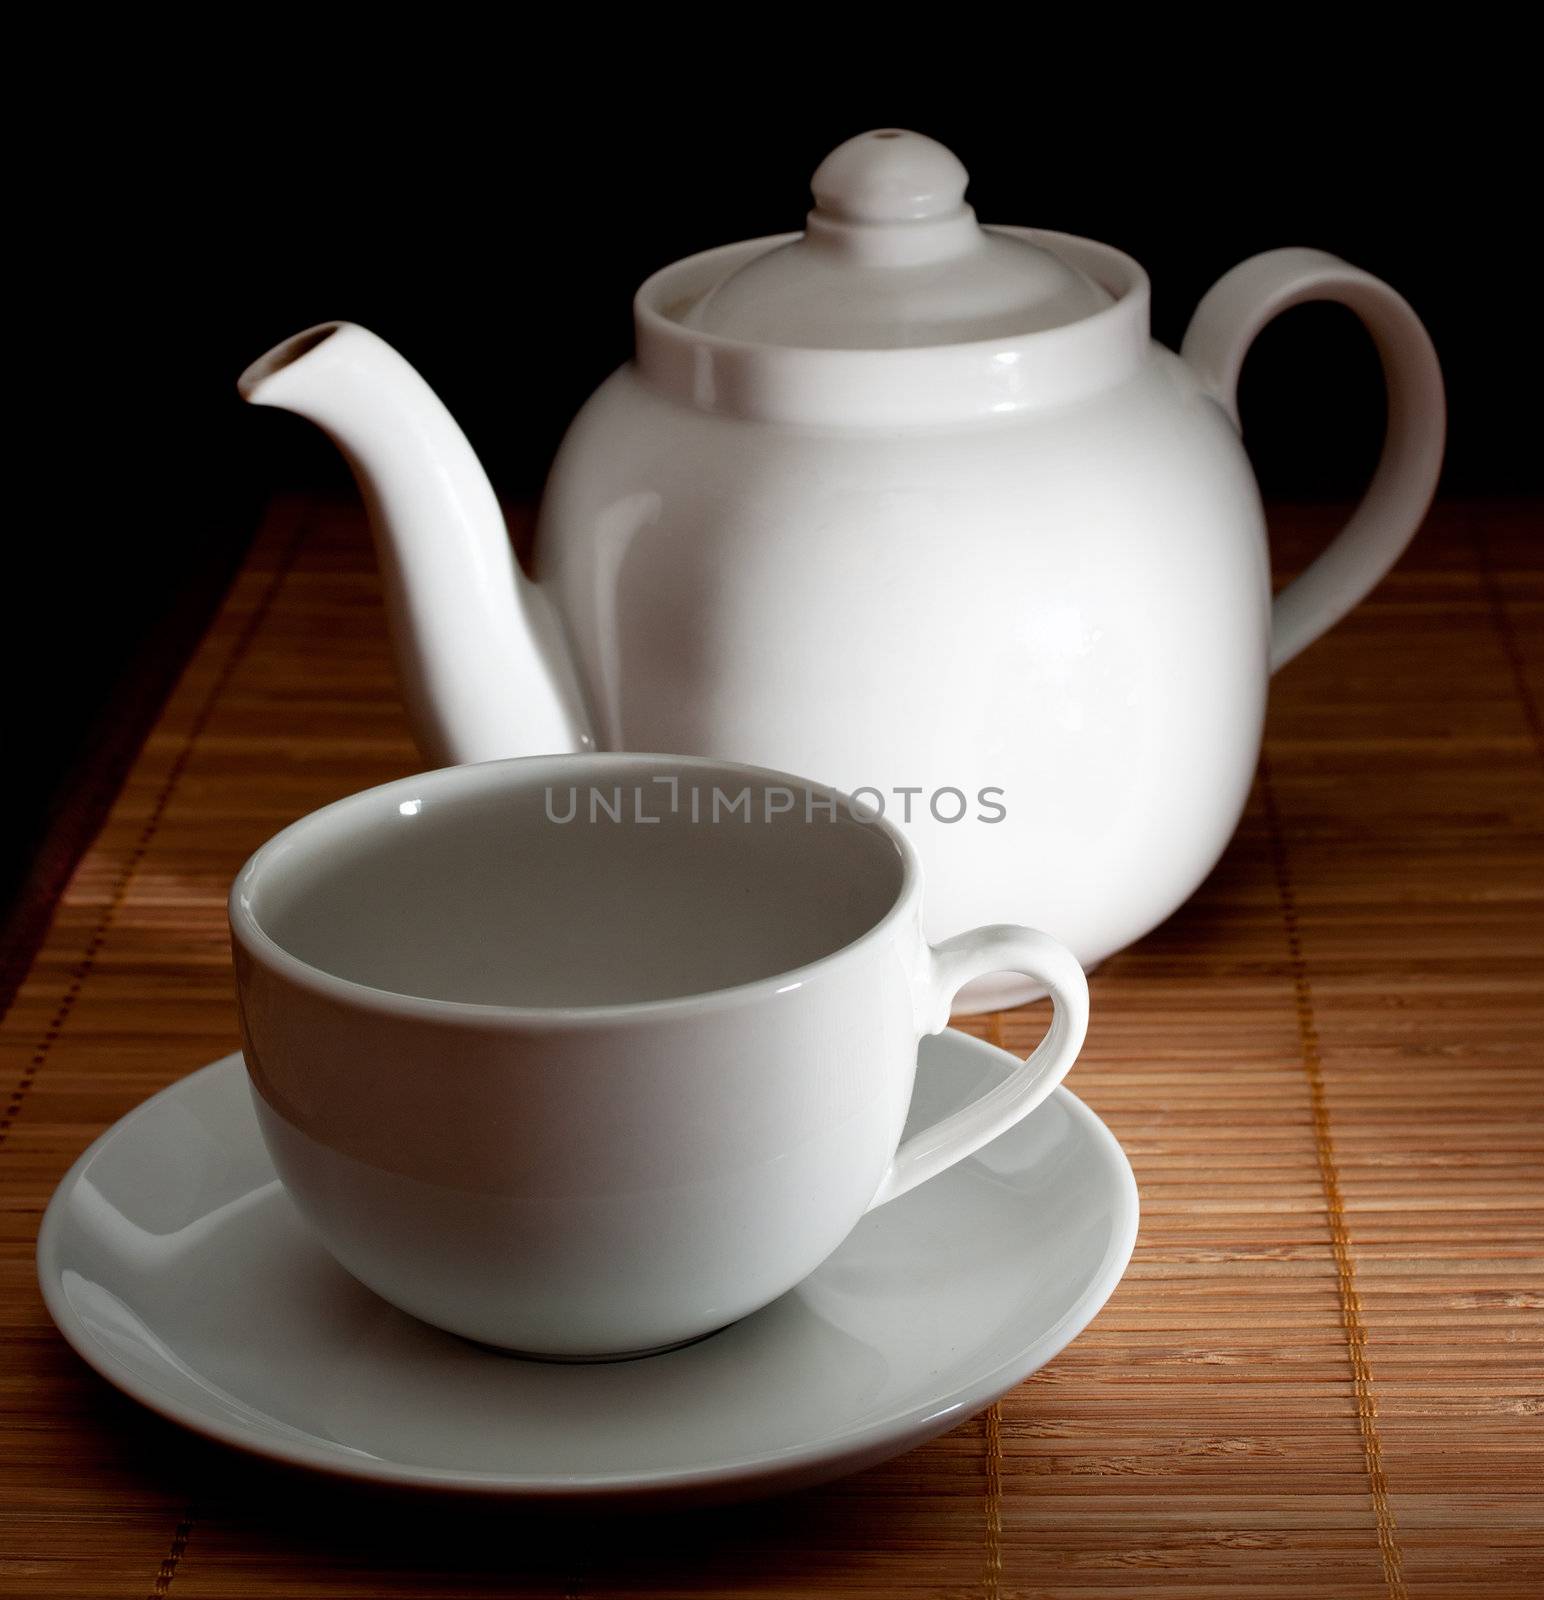 Tea and teapot on the bamboo napkin